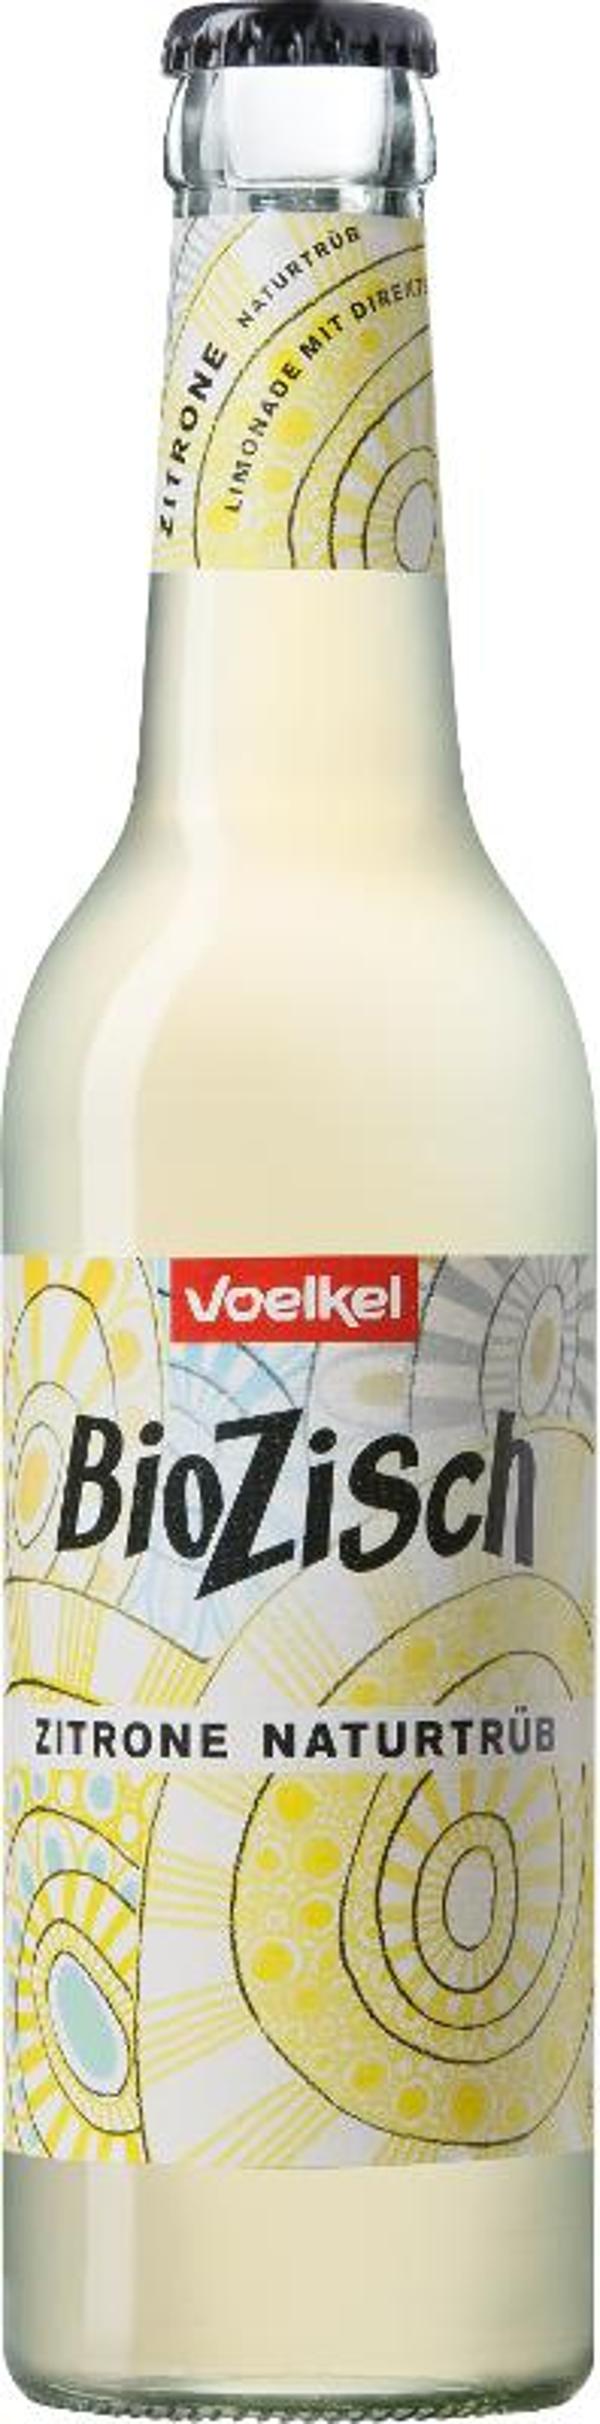 Produktfoto zu Bio Zisch Zitrone naturtrüb 12x 0,33 l